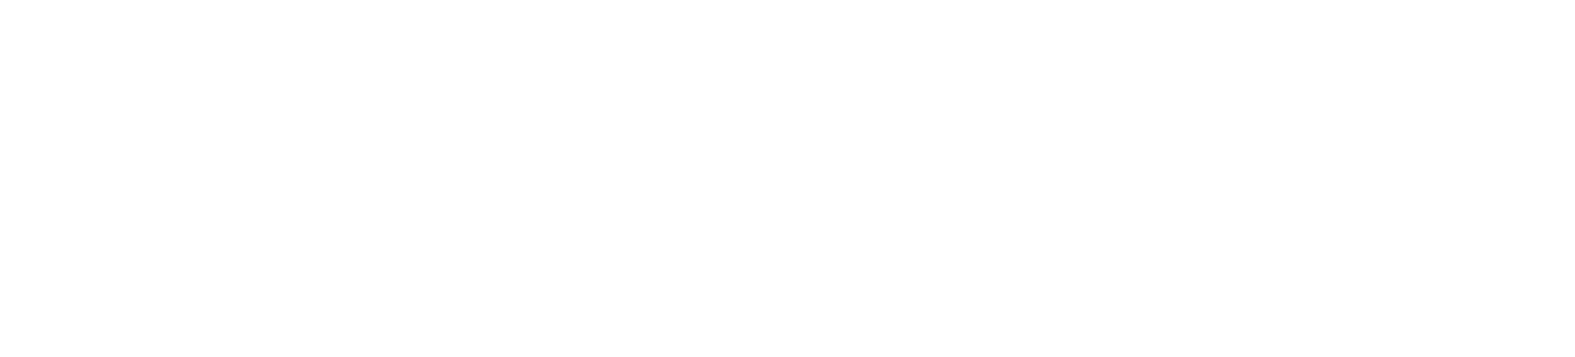 USANA logo large for dark backgrounds (transparent PNG)